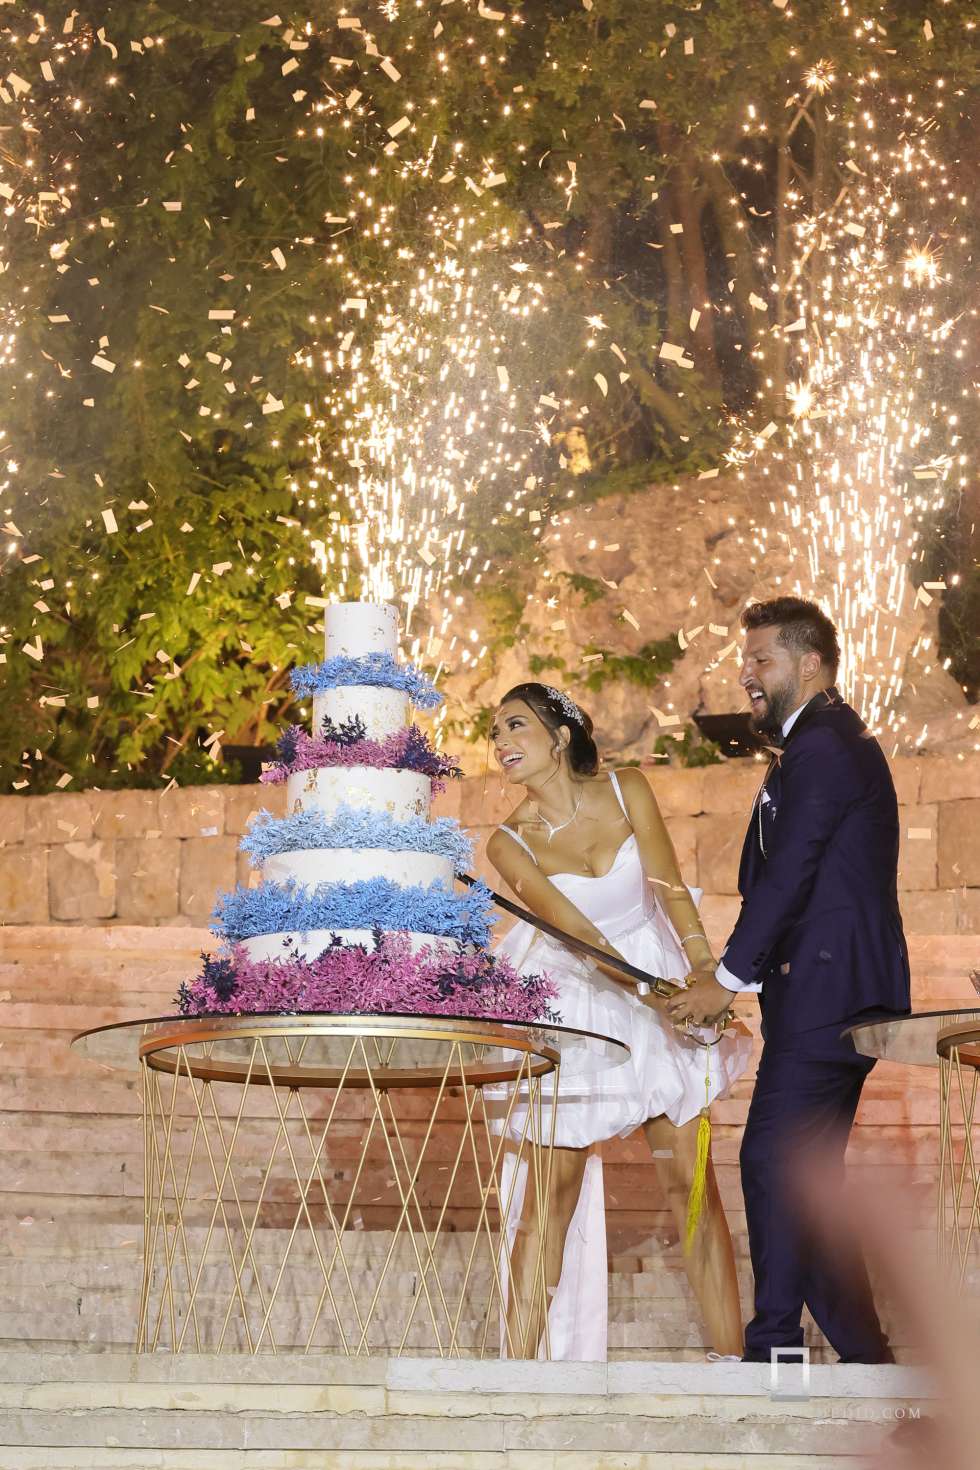 An Enchanting Blooming Wedding in Lebanon